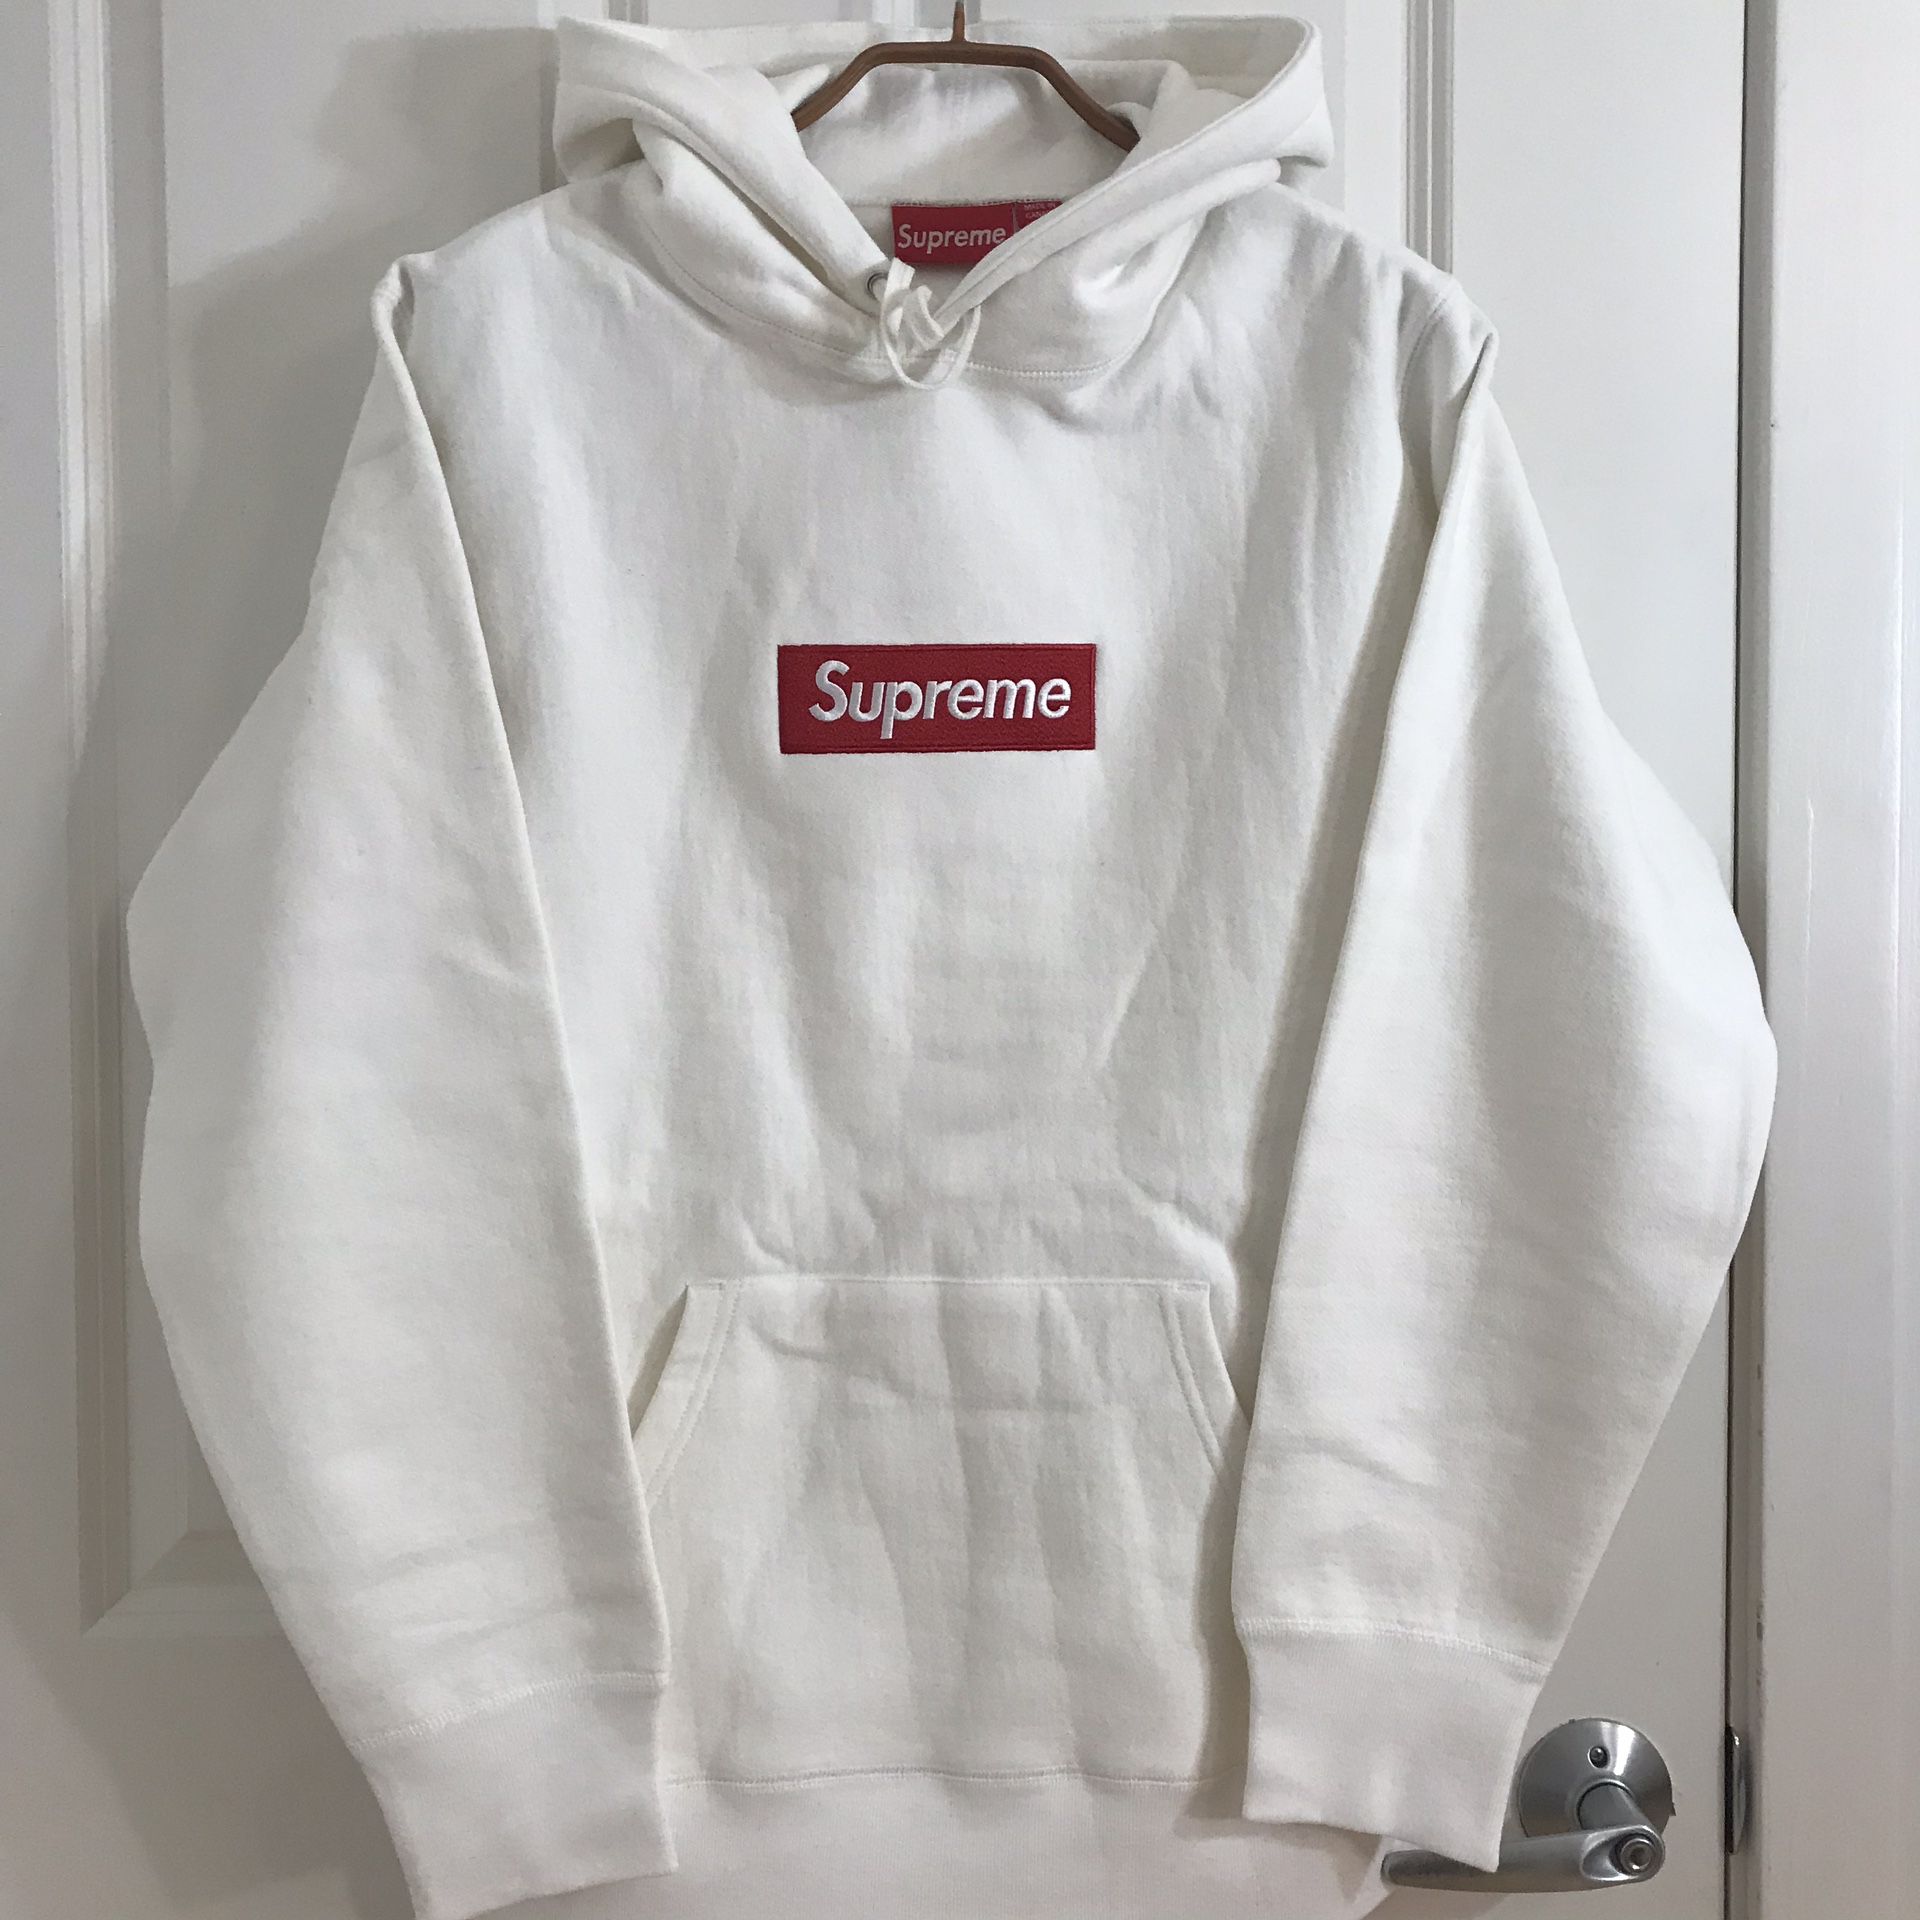 Supreme box logo hoodie white large size brand new